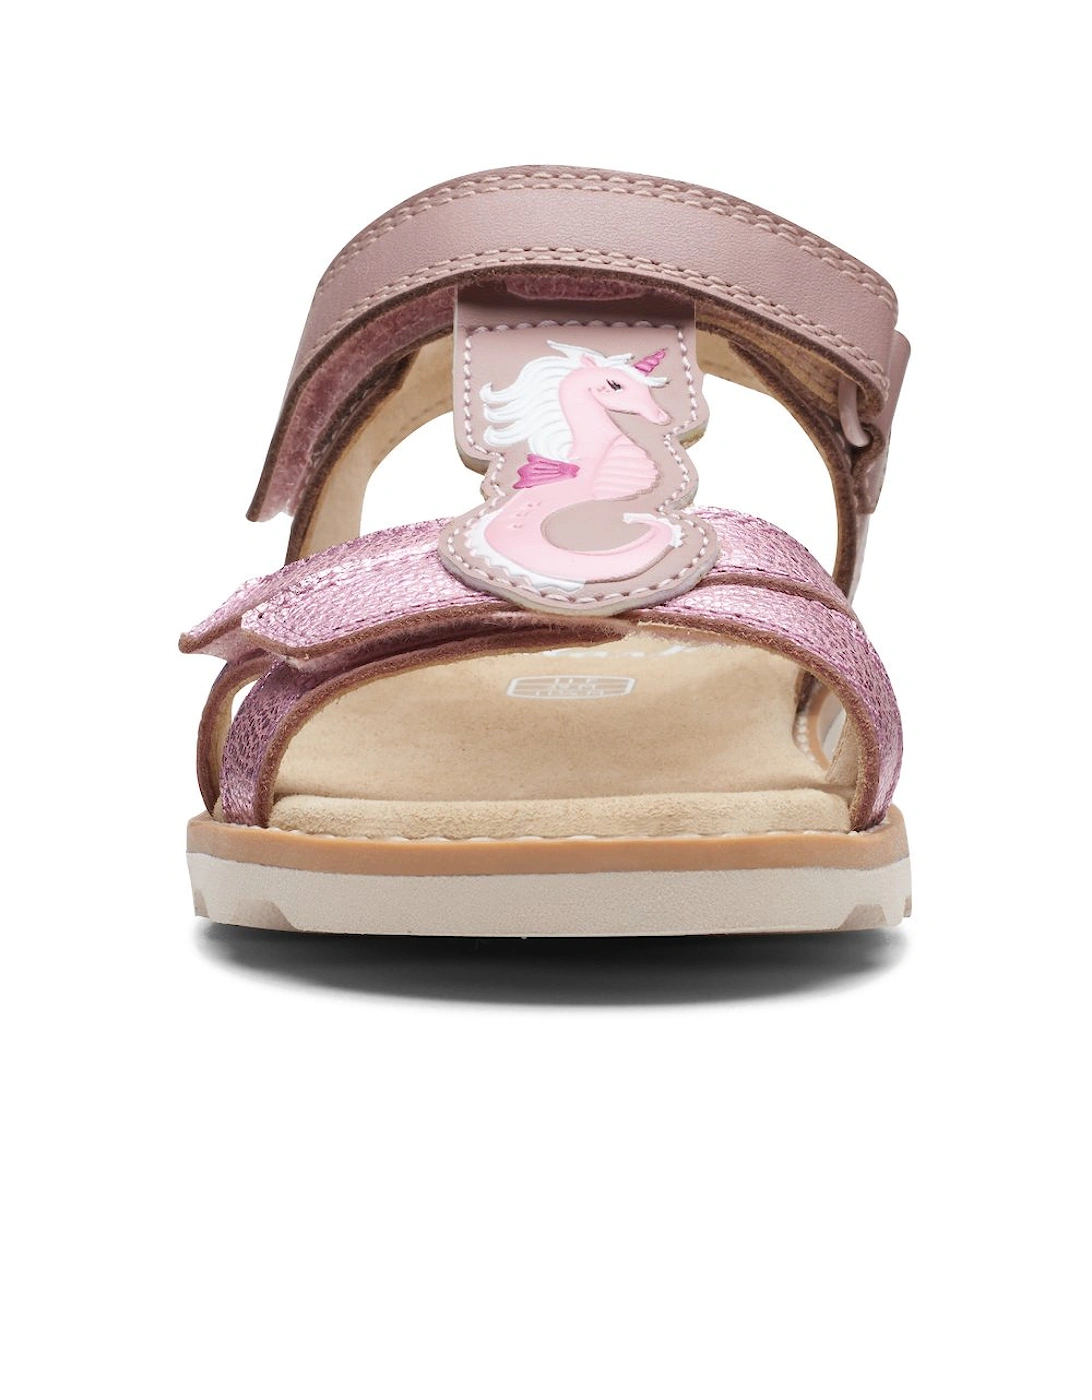 Crown Brill K Girls Infant Sandals